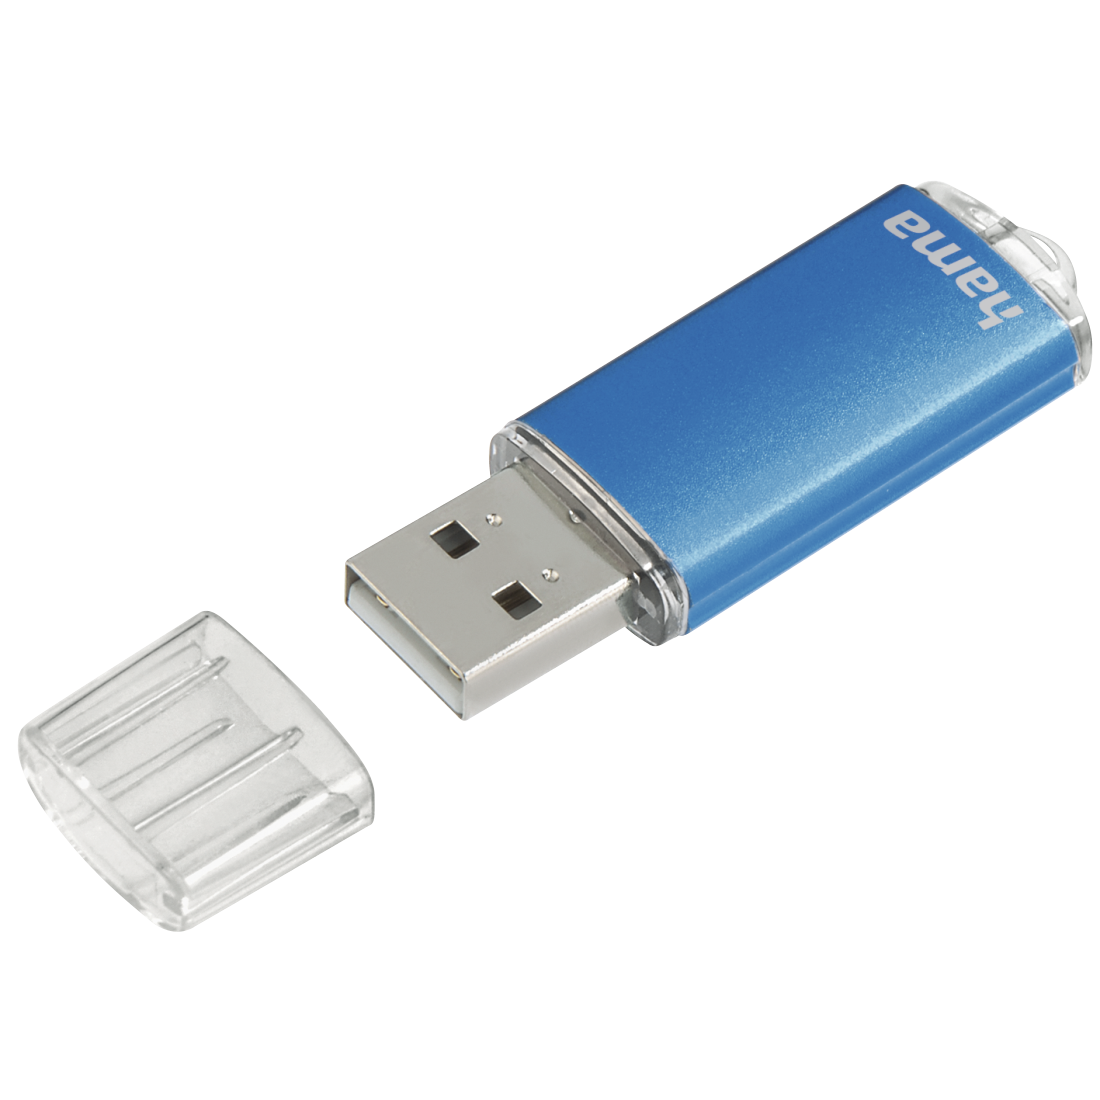 00090982 Hama "Laeta" USB Flash Driver, USB 2.0, 8 GB, 10 MB/s, blue